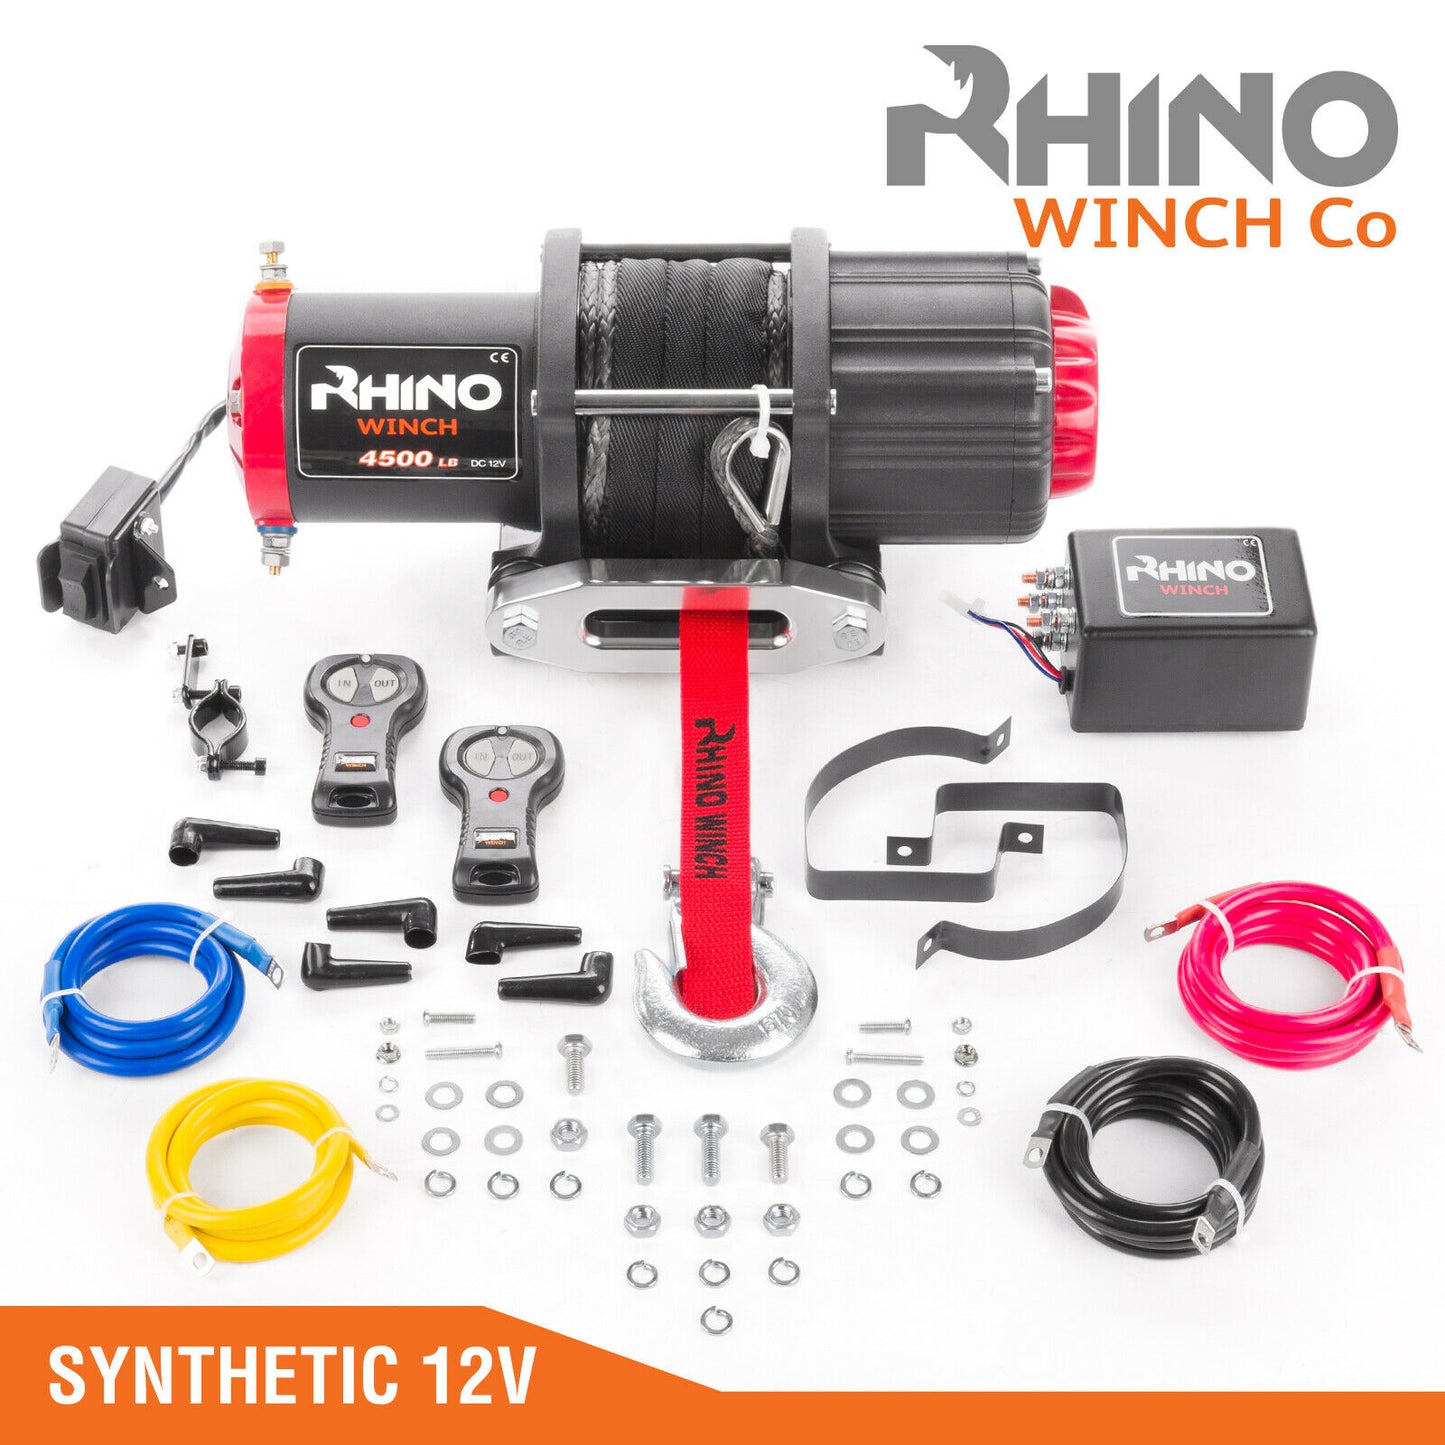 12v Electric Winch, 4500lb Synthetic Rope, Heavy Duty 4x4, ATV Recovery ~ RHINO